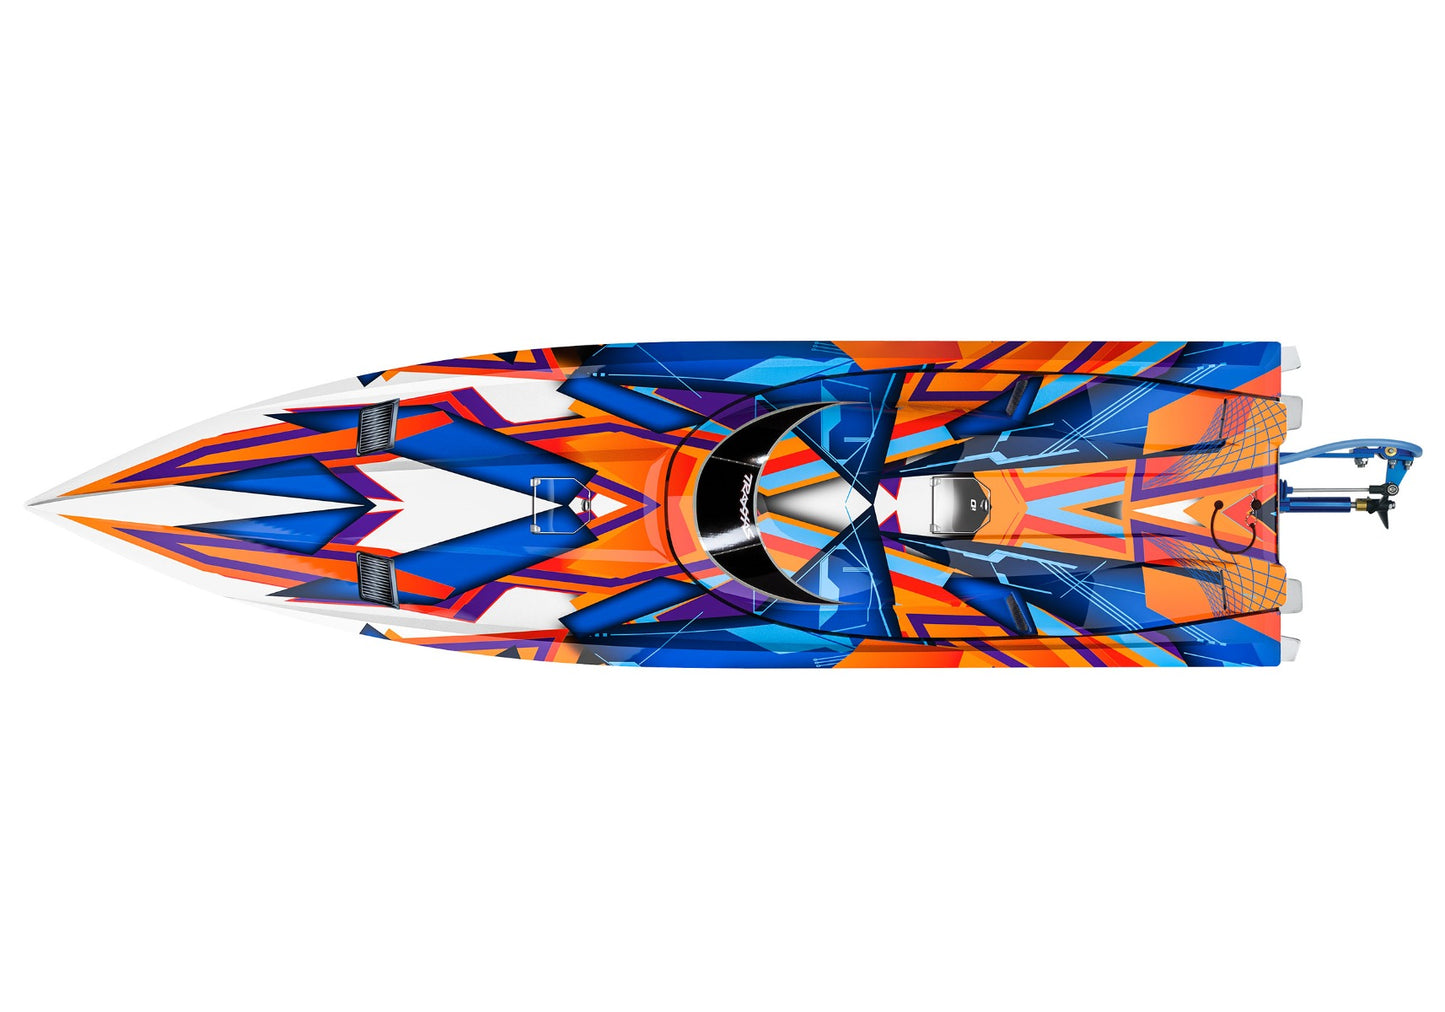 57076-4 Spartan Brushless 36 Inch RC Race Boat Orange